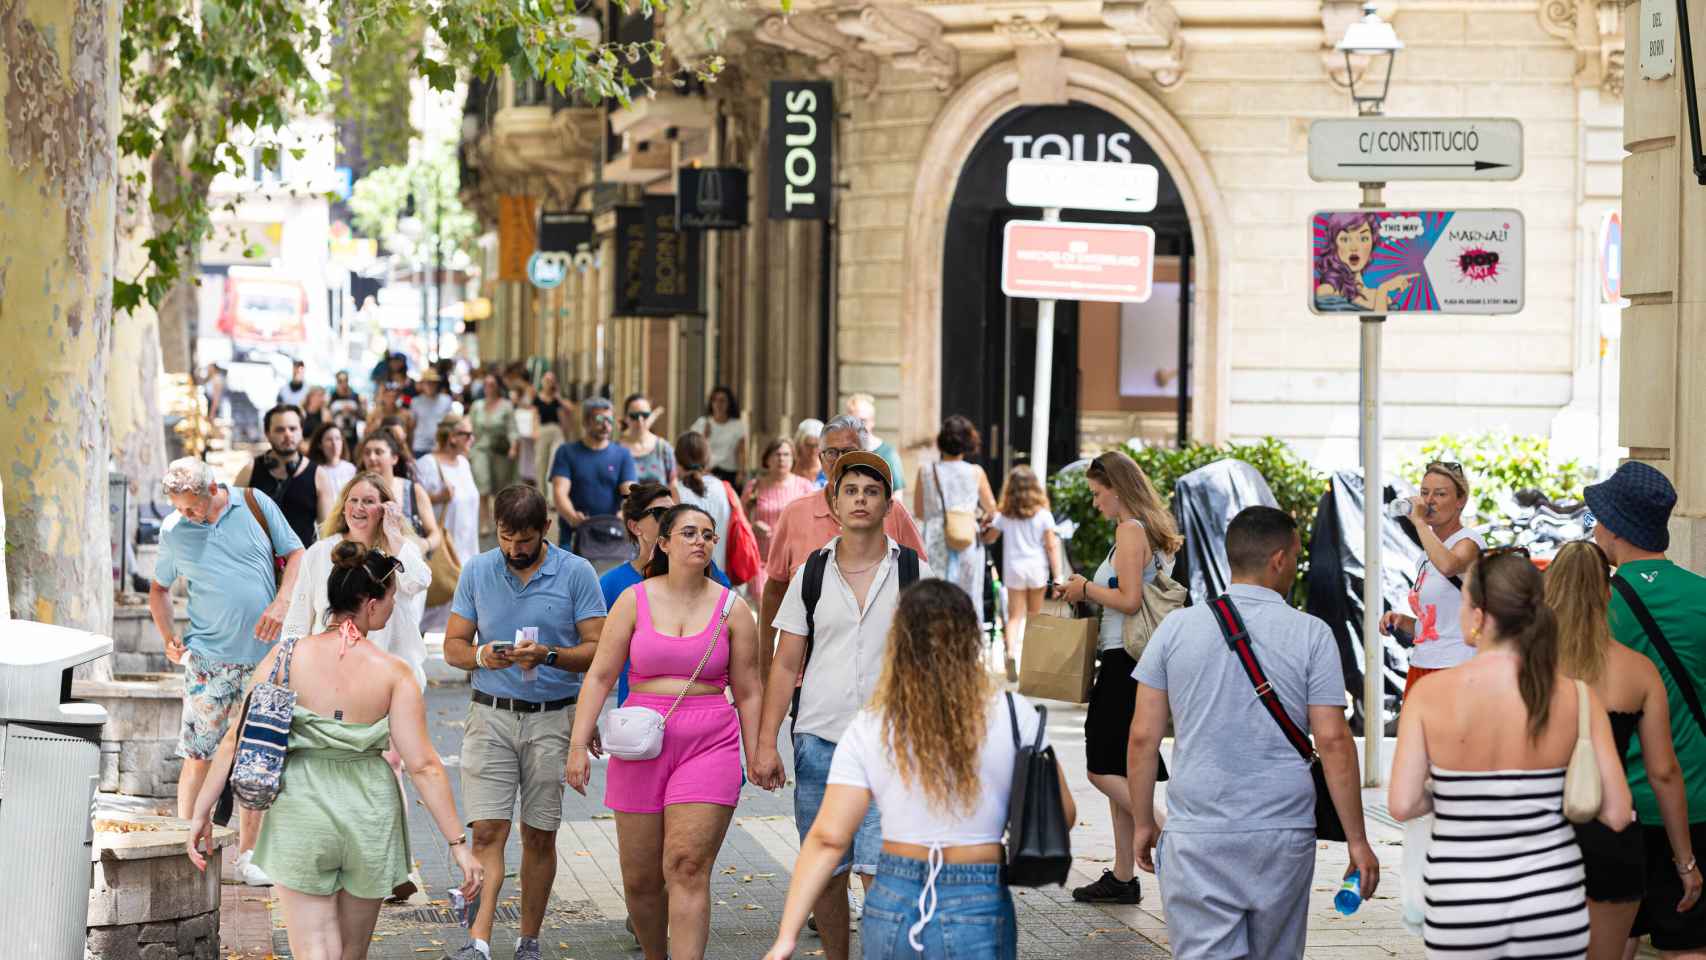 Turistas paseando por Barcelona